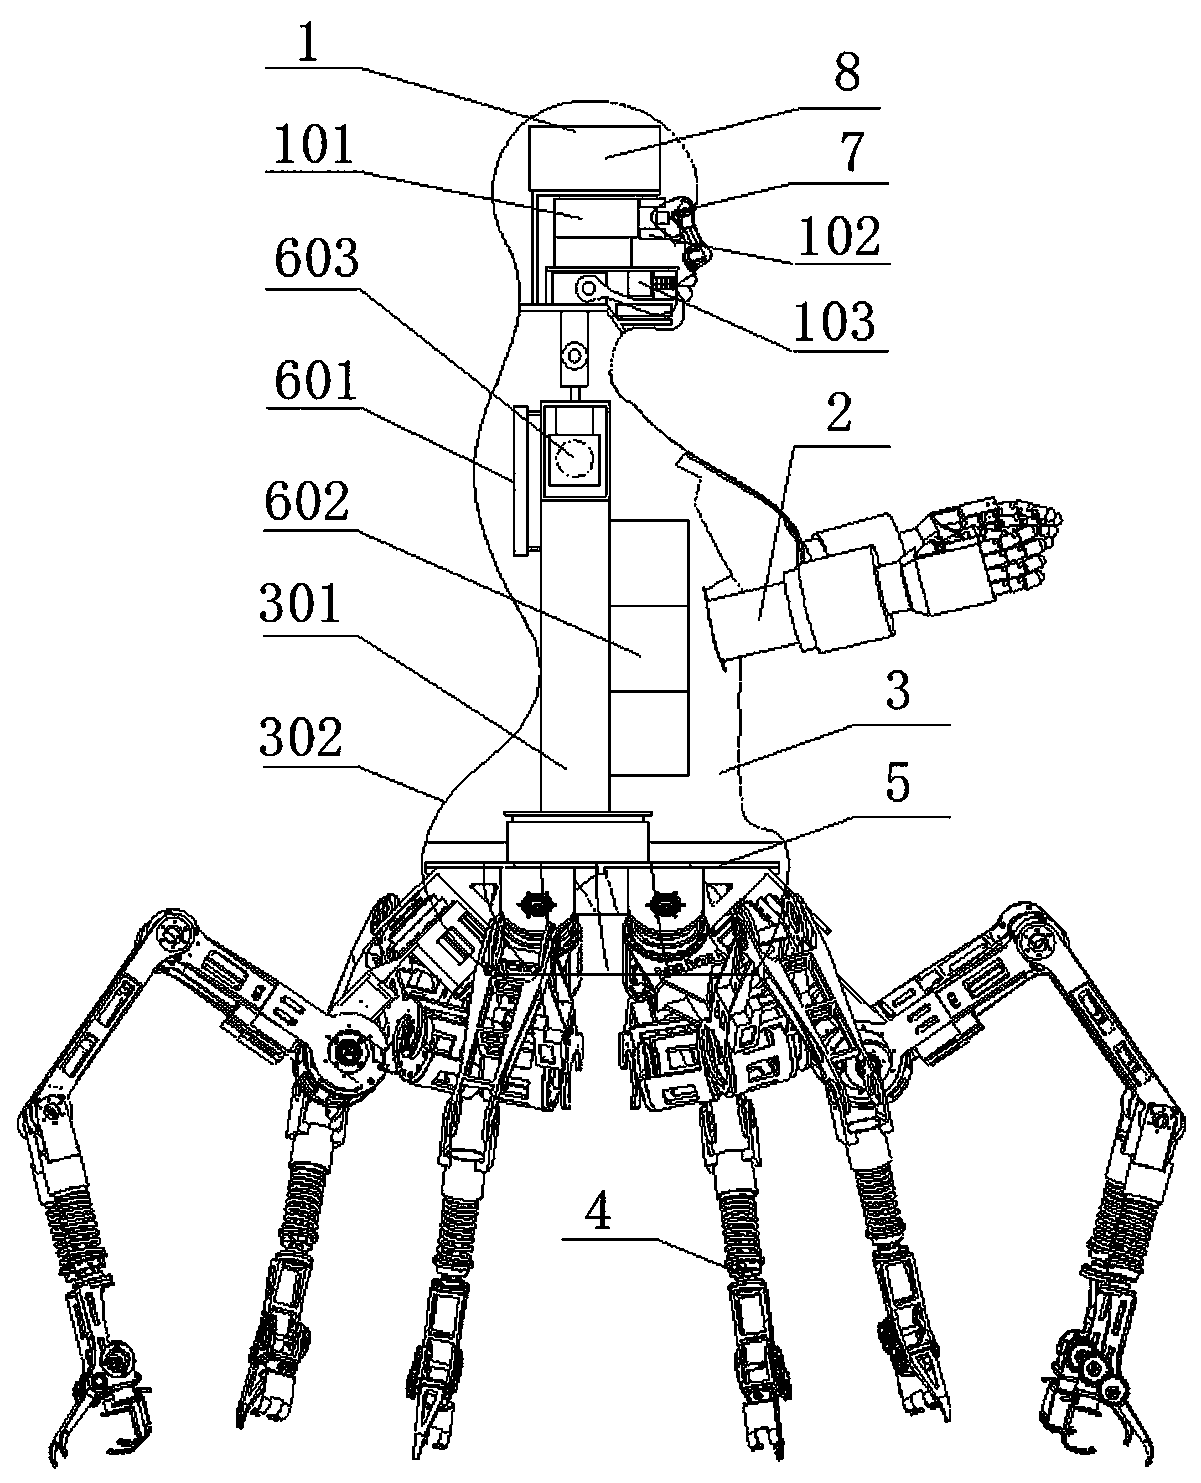 Multifunctional humanoid multi-legged robot